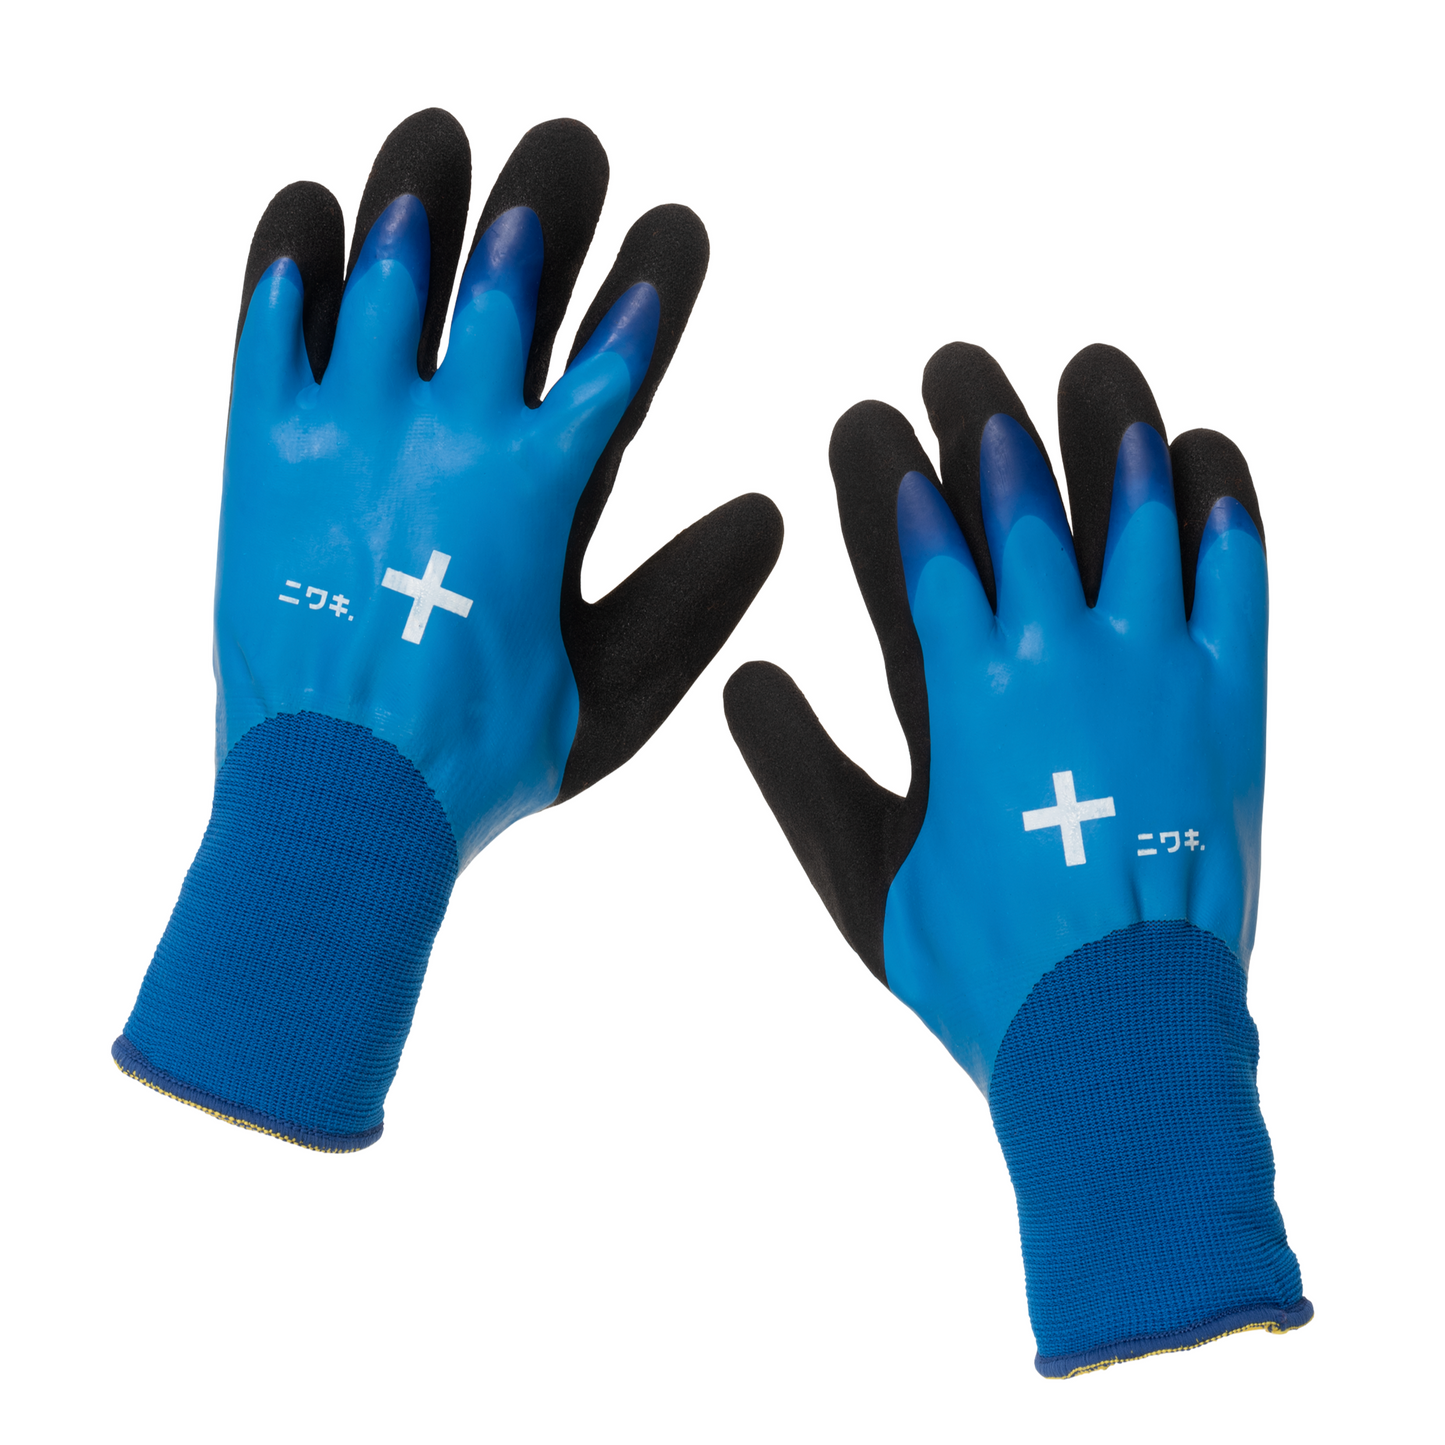 Niwaki Nitrile Grip Winter Gardening Gloves